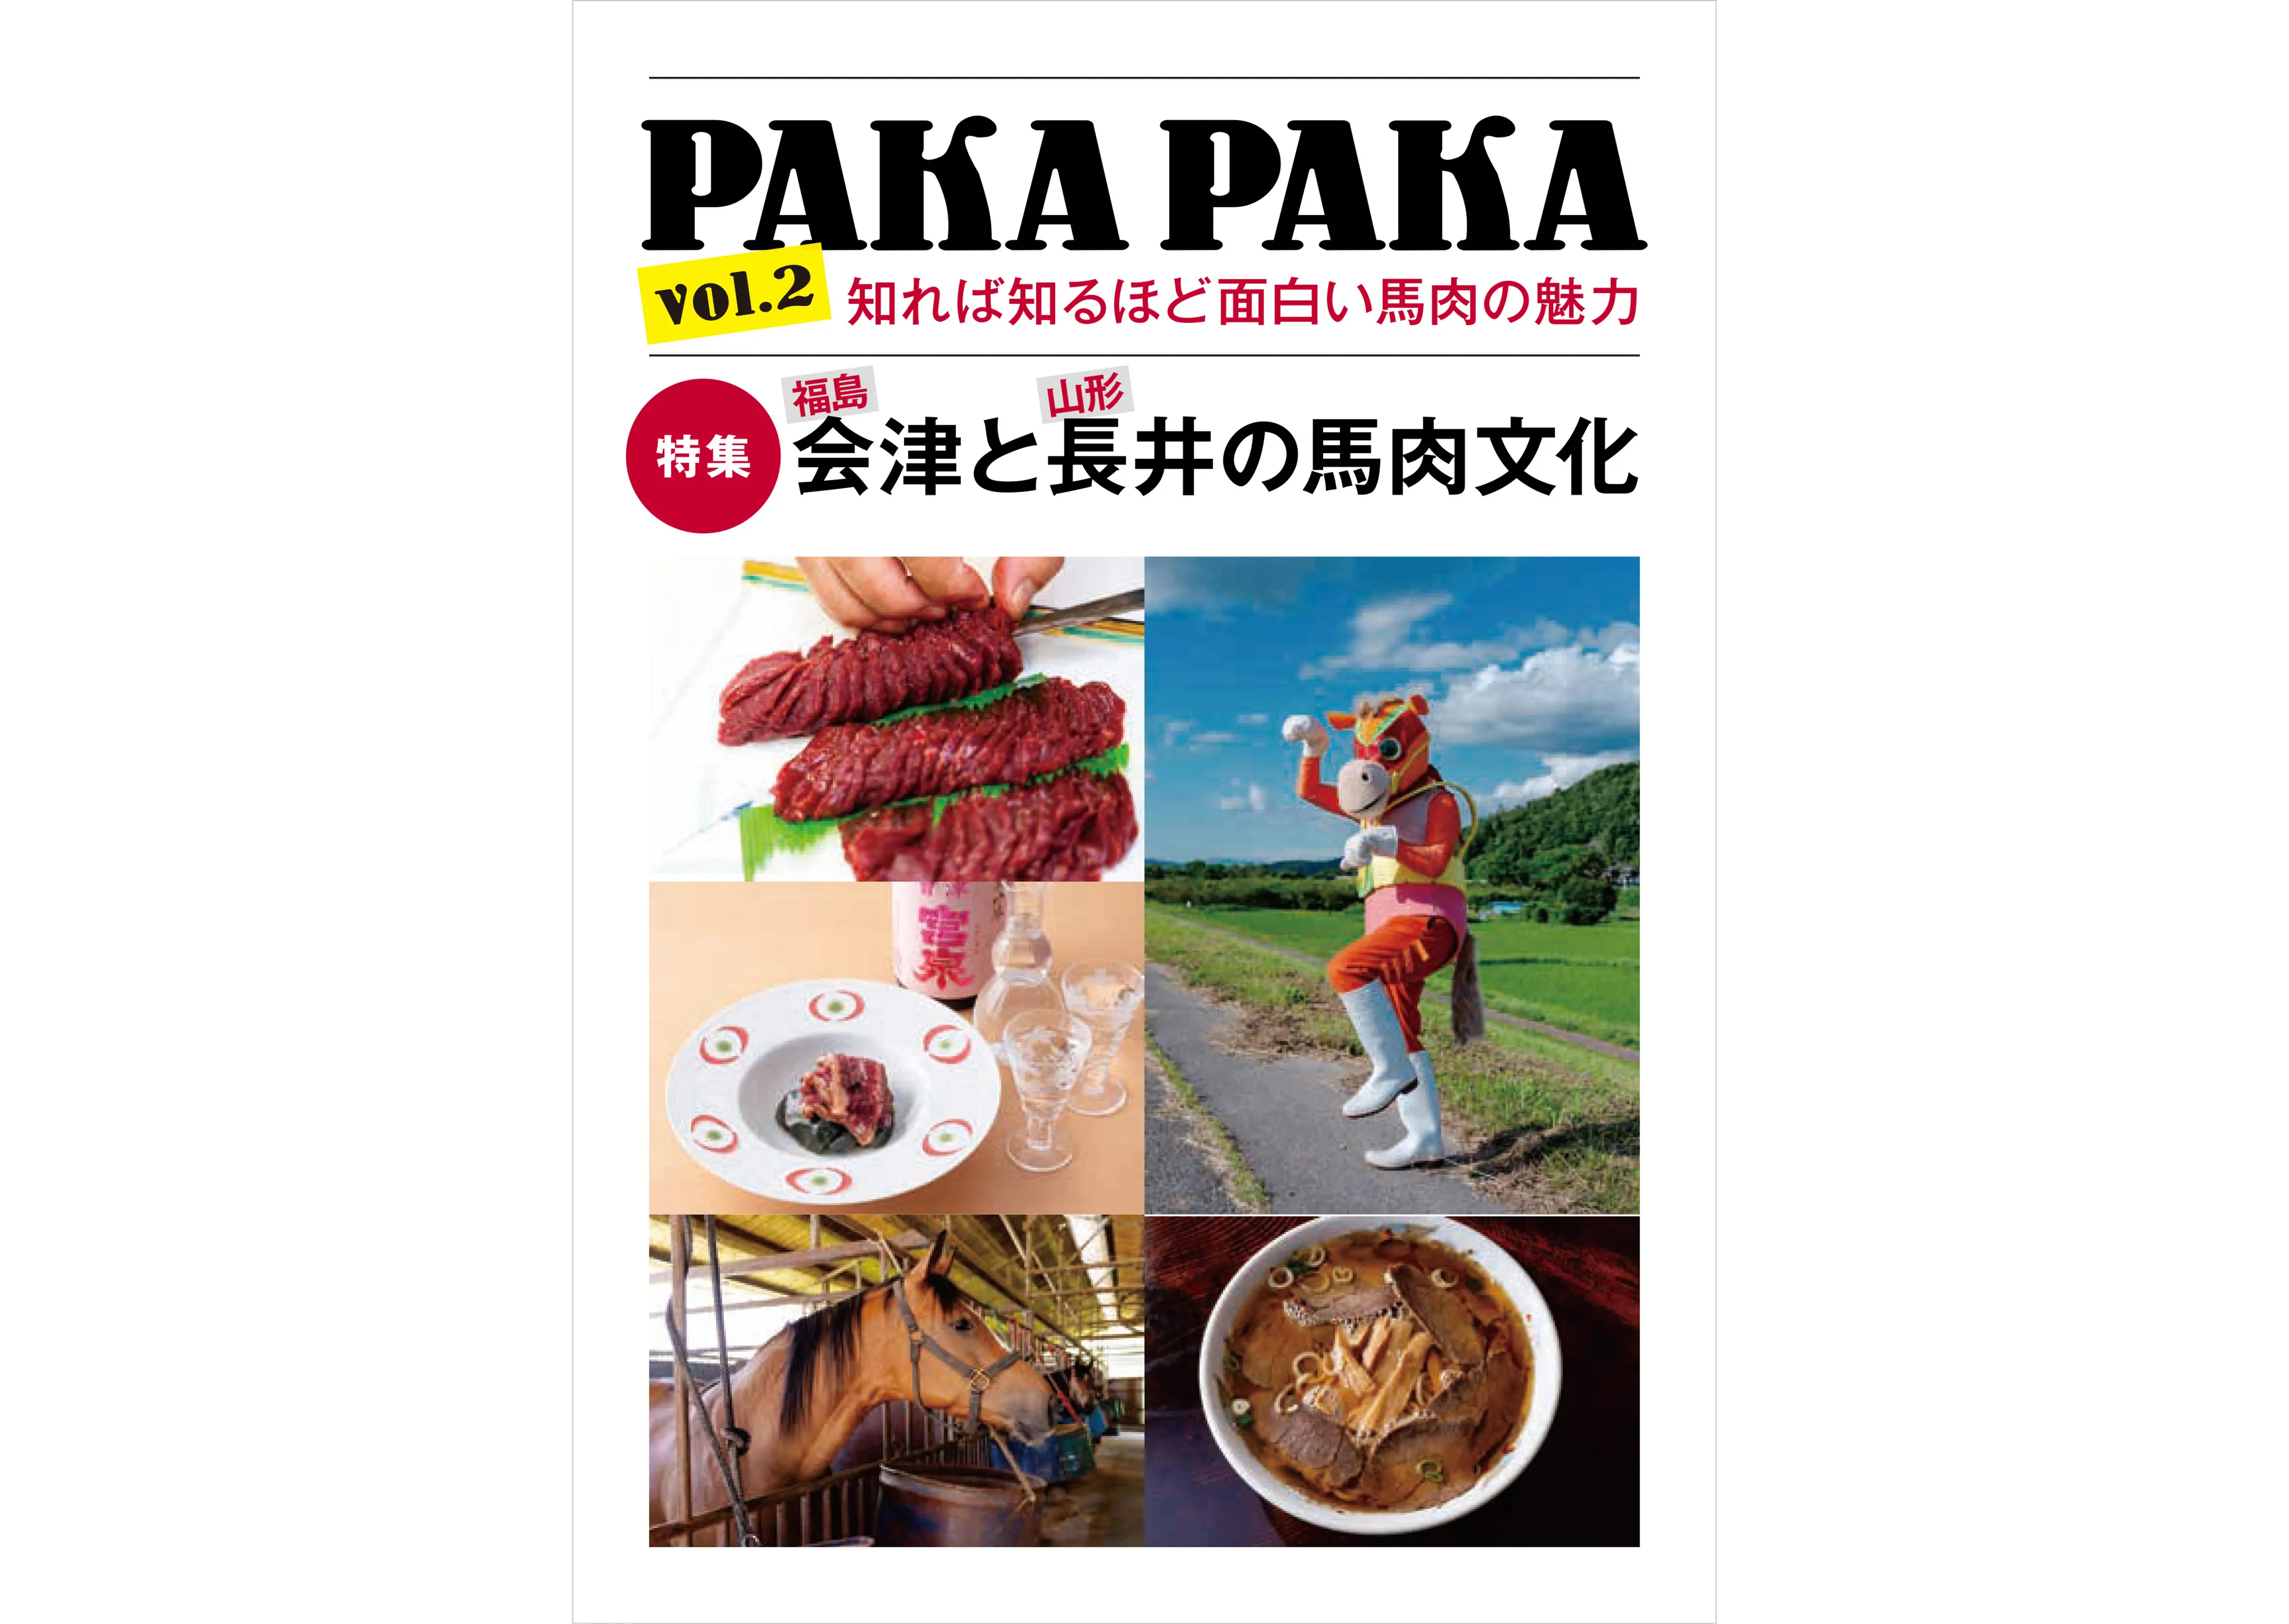 PAKAPAKA vol.2 紙面